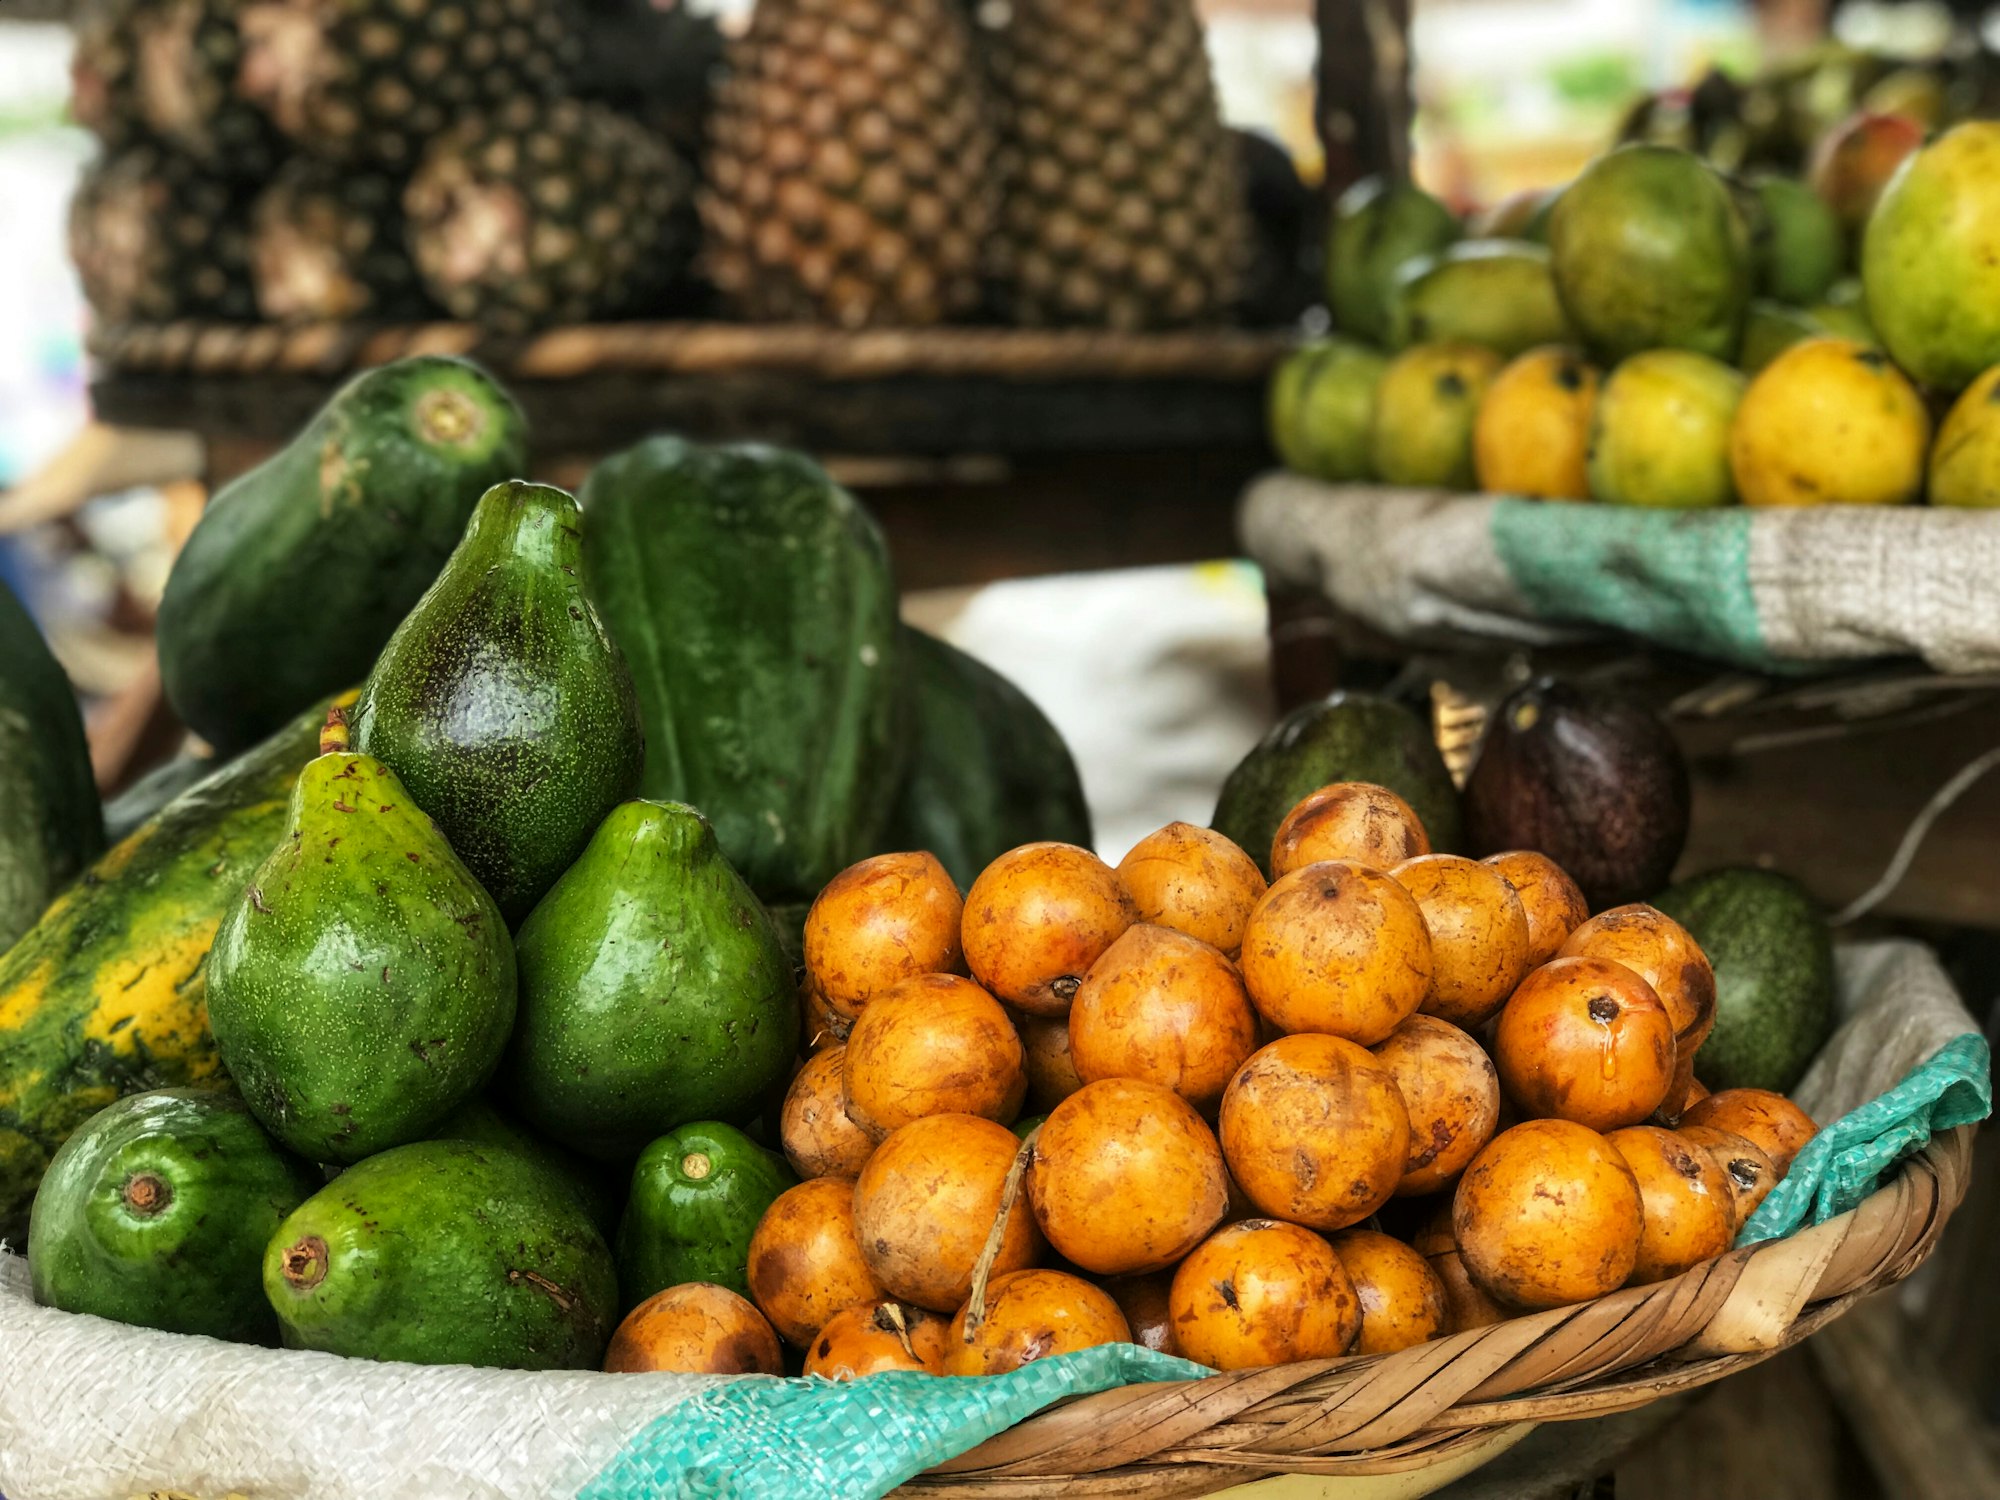 Fruit Market - Avocado, Agbalumo (African Star Apple), Pineapple 